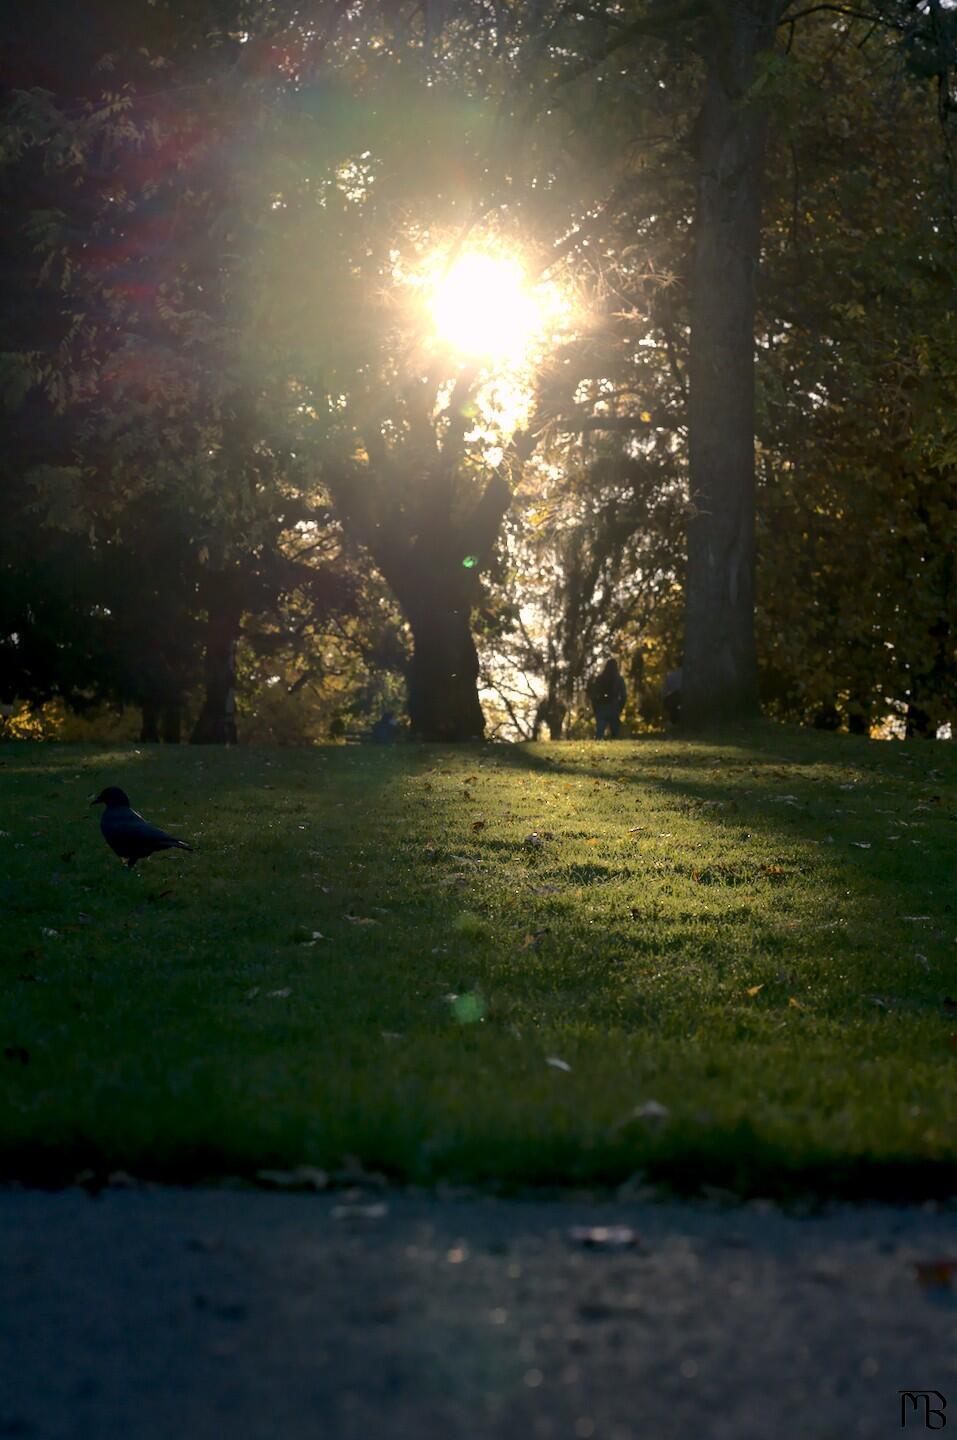 Crow walking away from sun beam